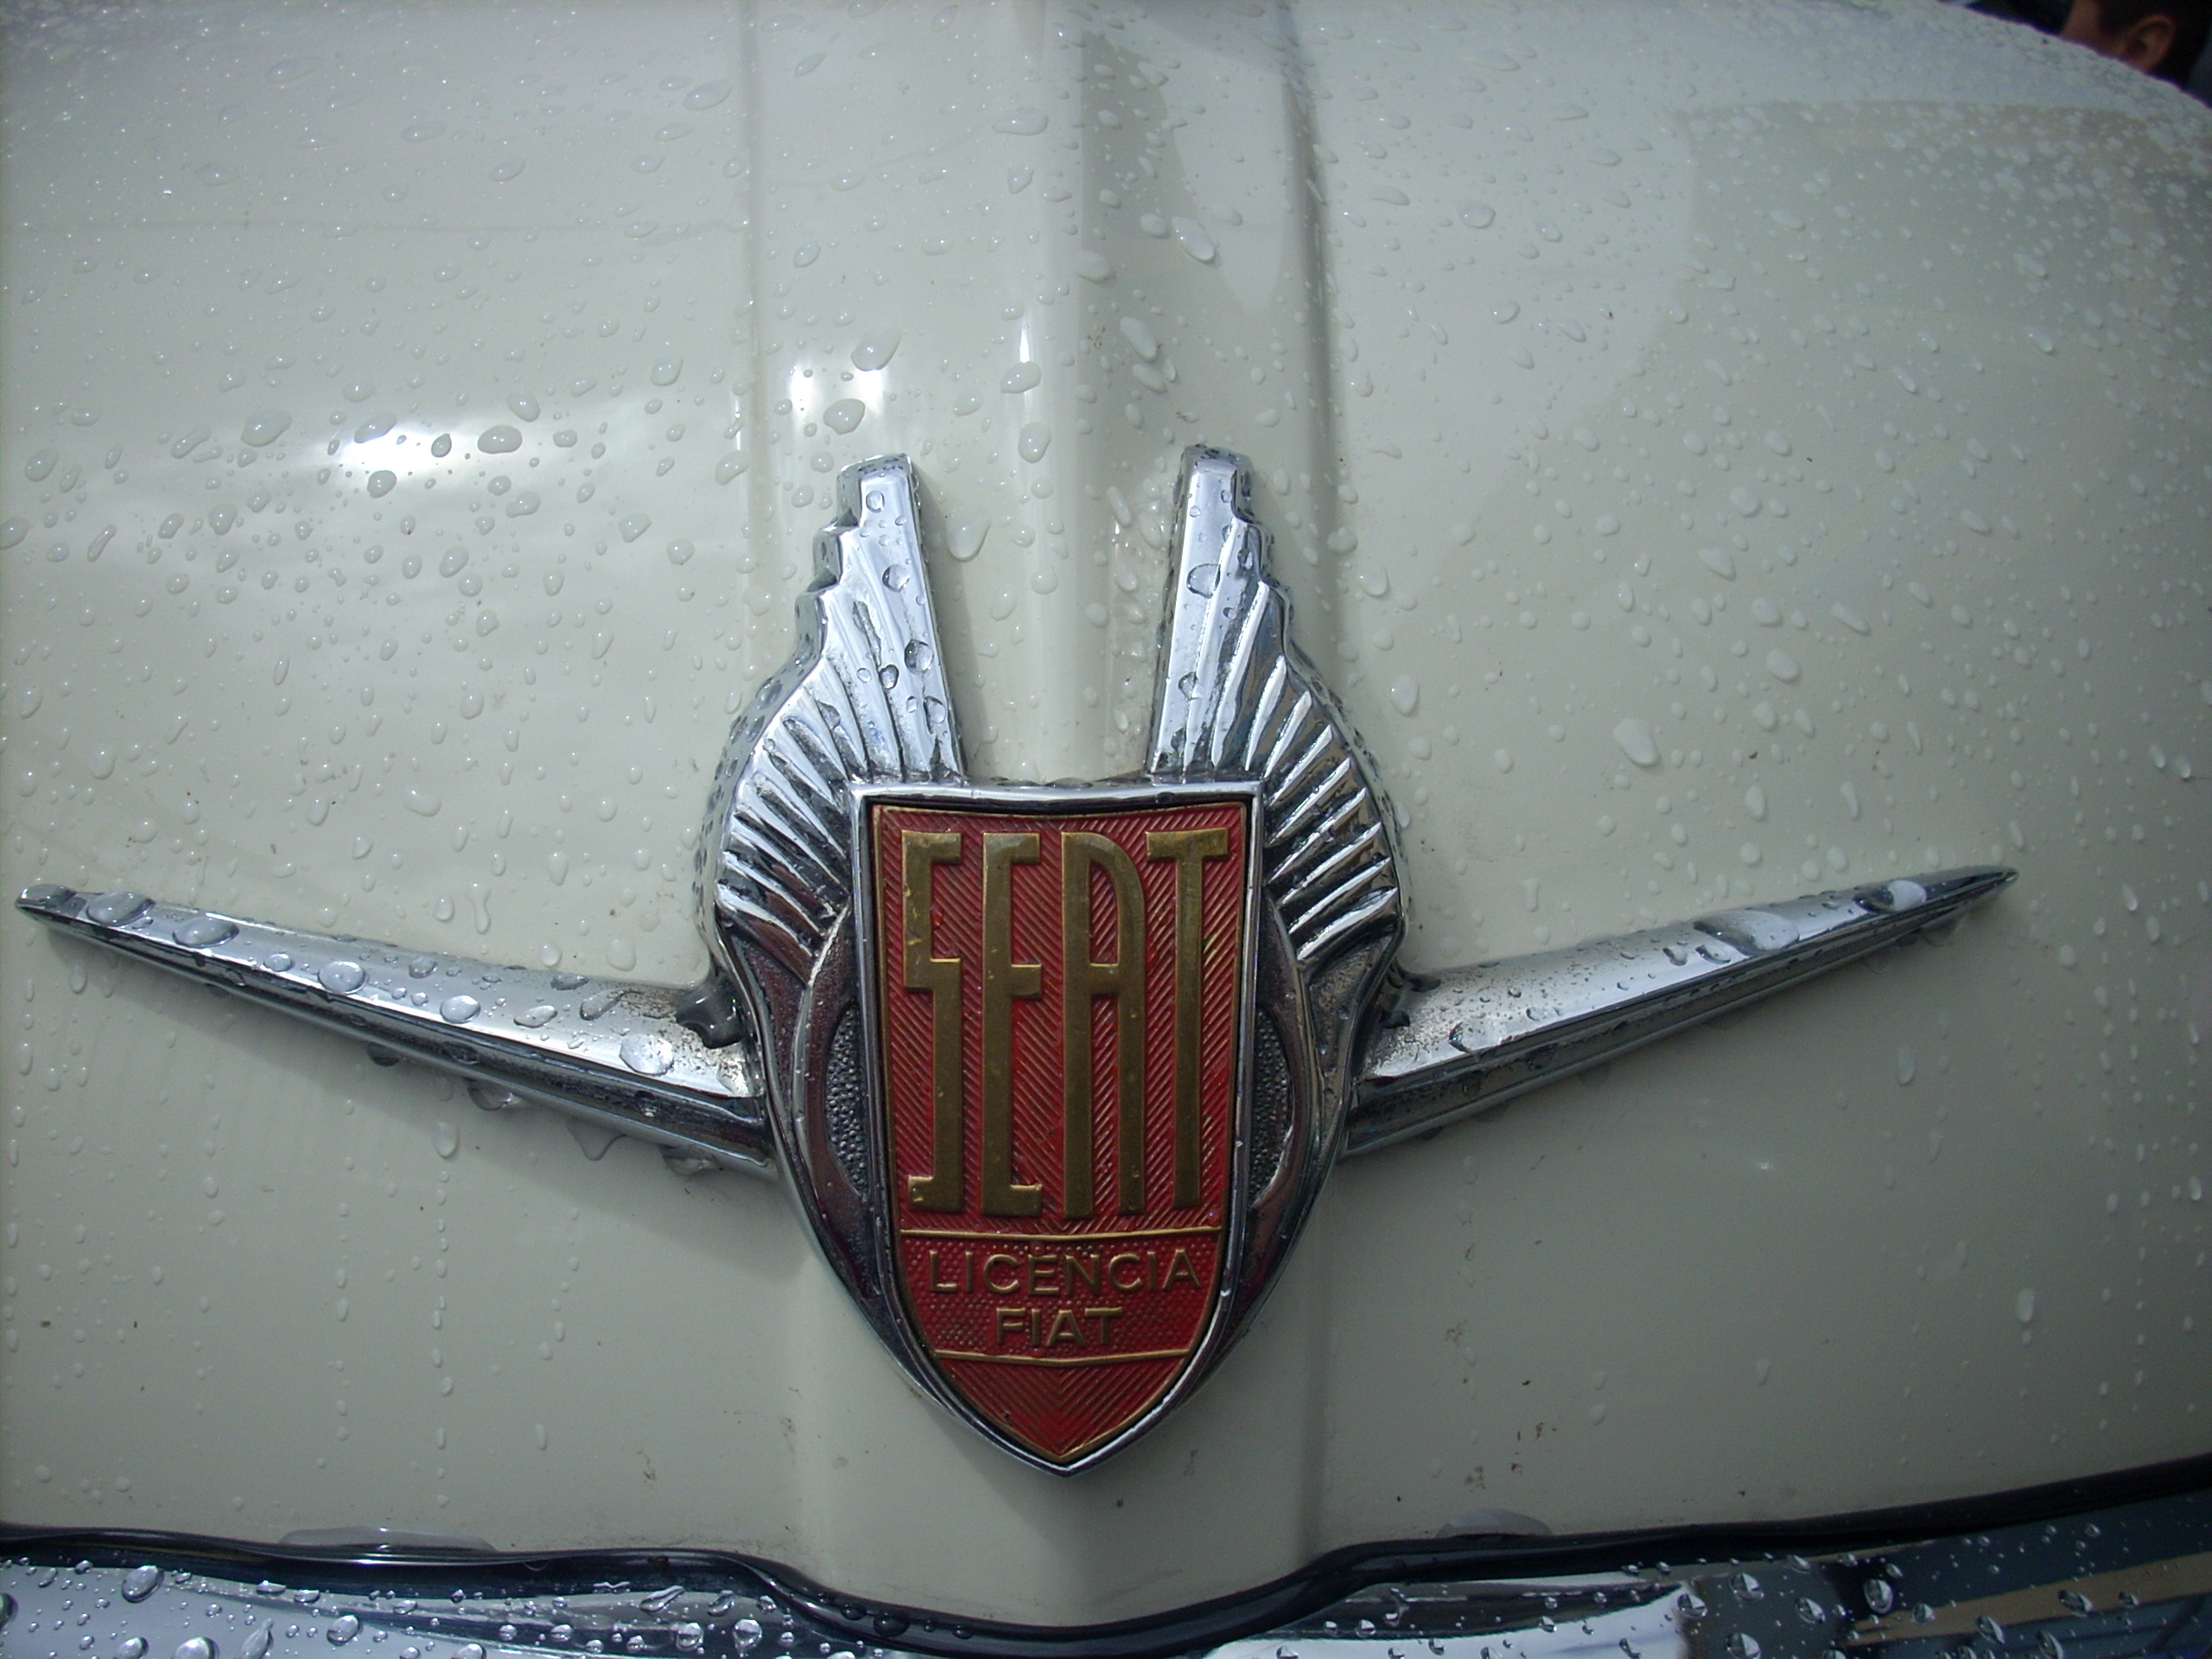 File:Seat Emblema.JPG - Wikimedia Commons